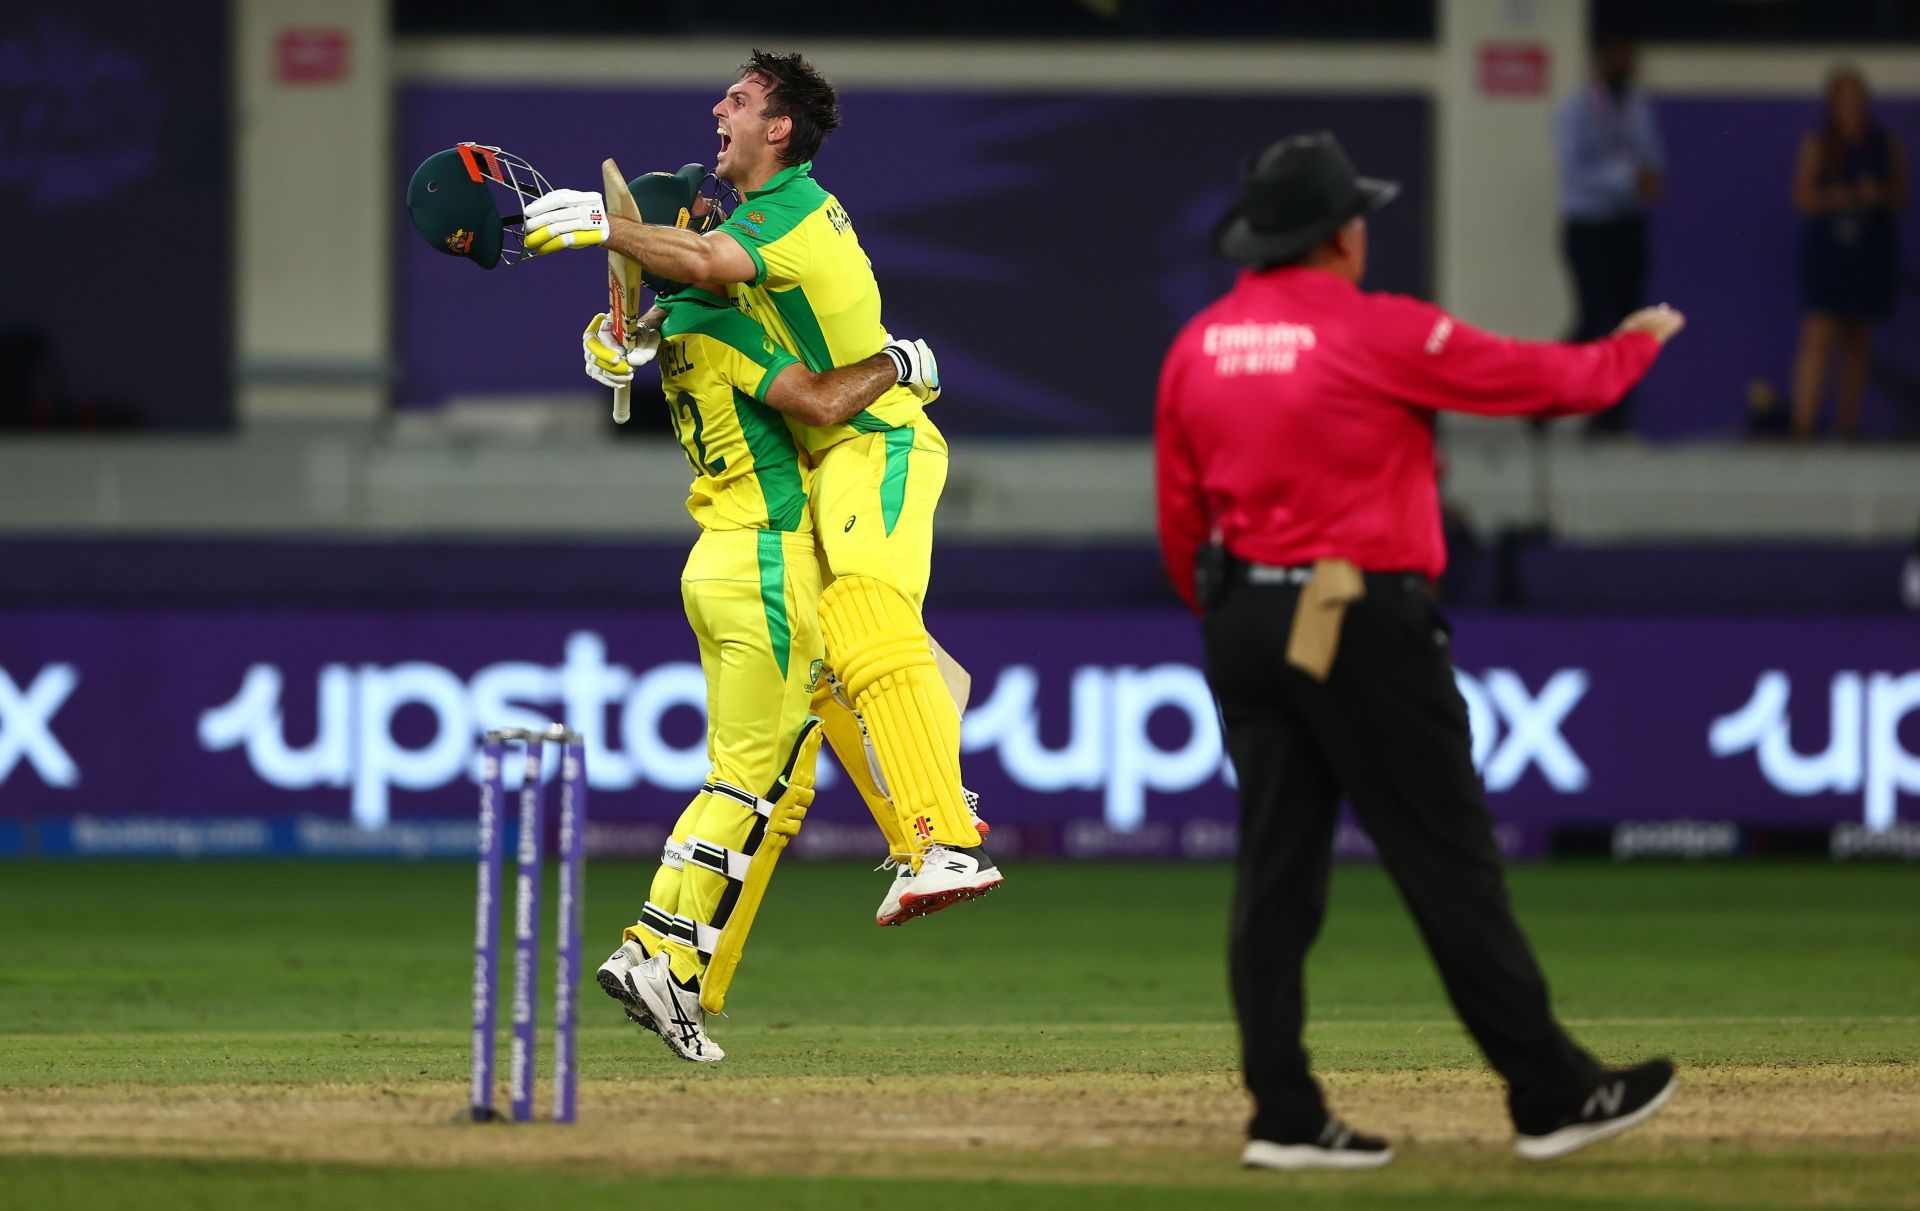 Mitchell Marsh celebrates after hitting the winning runs against New Zealand.